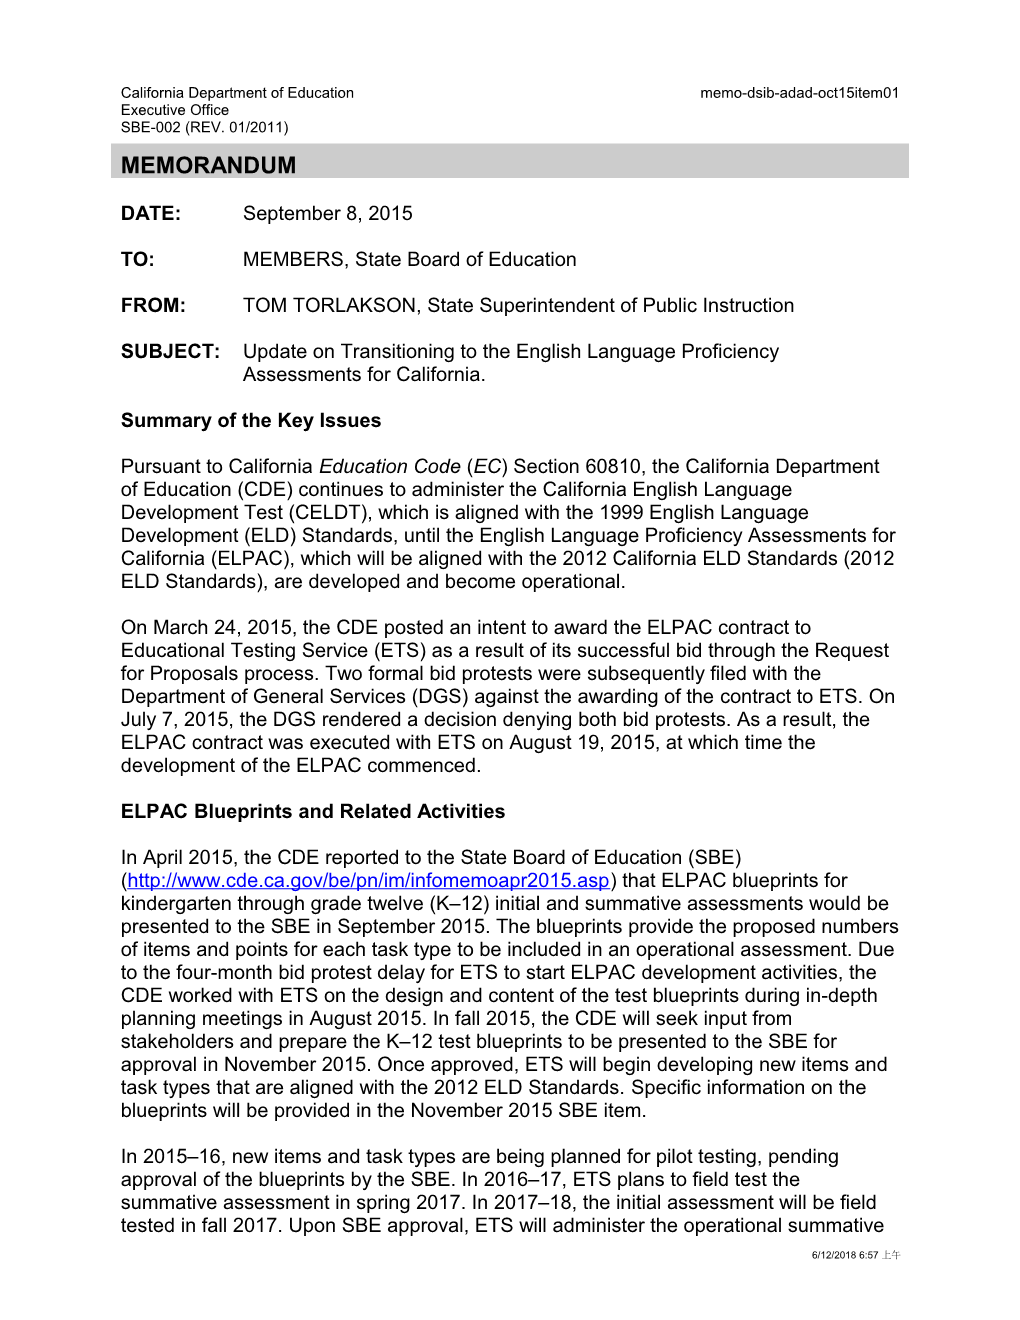 October 2015 Memo DSIB ADAD Item 01 - Information Memorandum (CA State Board of Education)